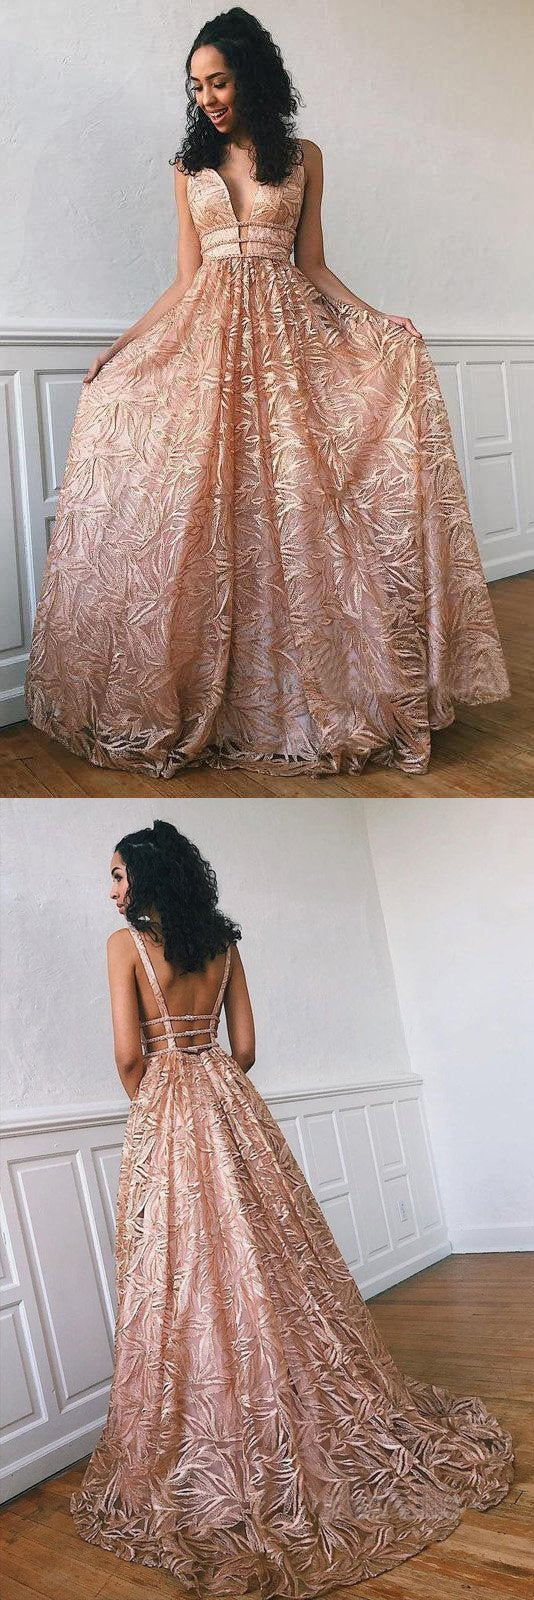 Simple Lace Open Back Evening Dresses, A Line Deep V Neck Long Prom Dresses